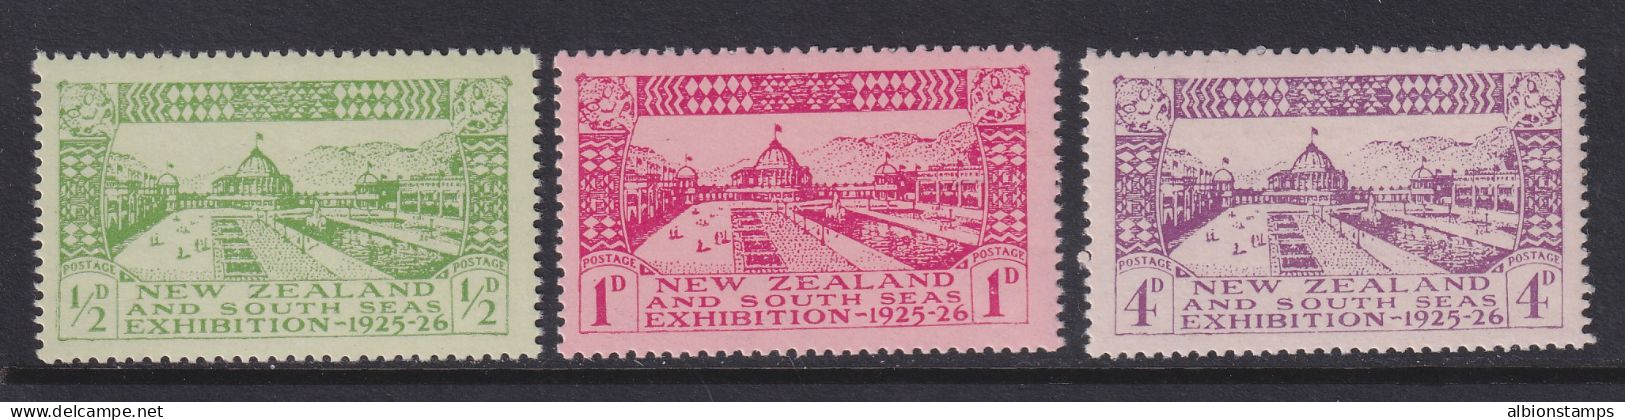 New Zealand, Scott 179-181 (SG 463-465), MNH - Ungebraucht